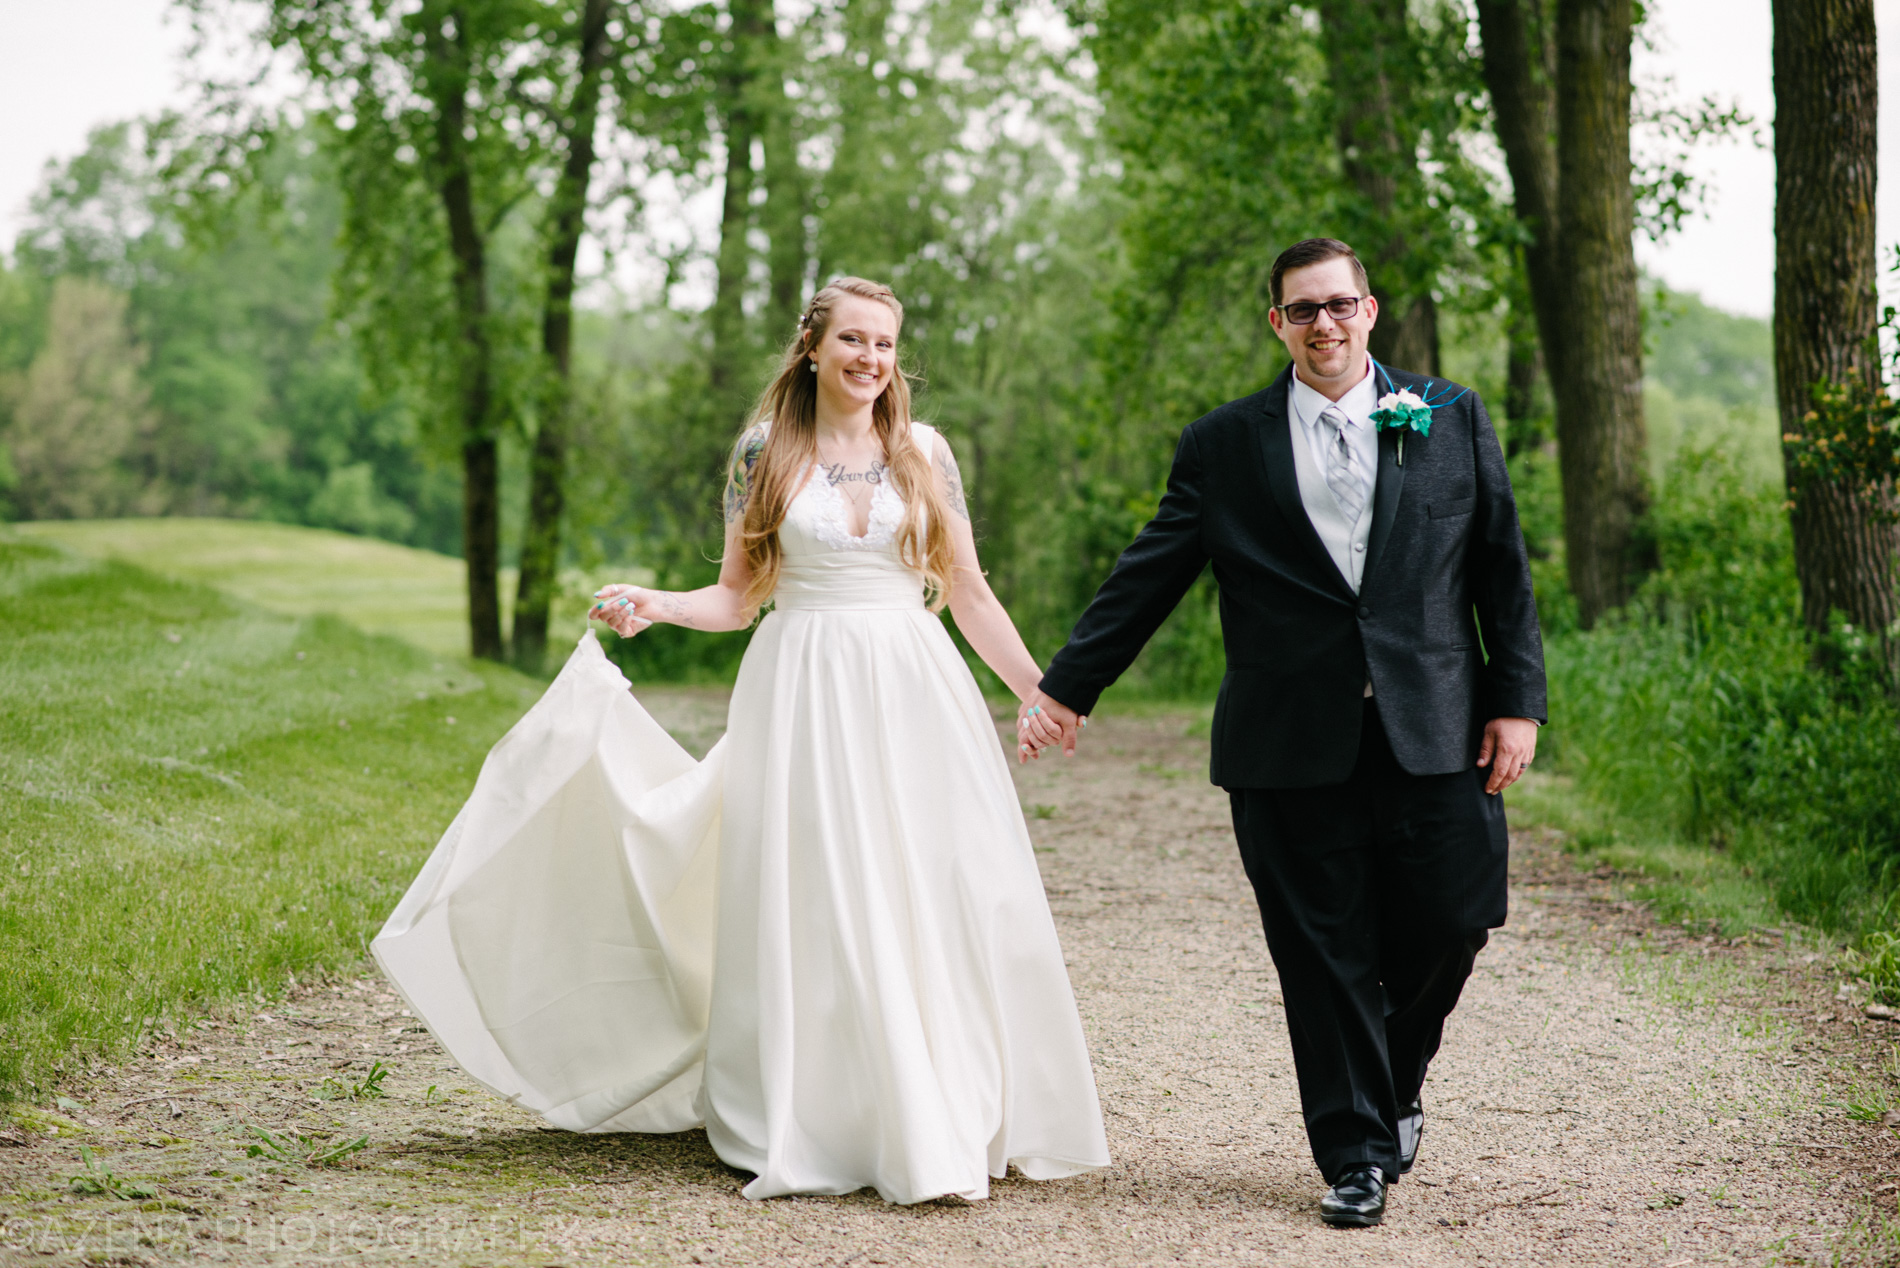 Happy bride and groom walking hand in hand